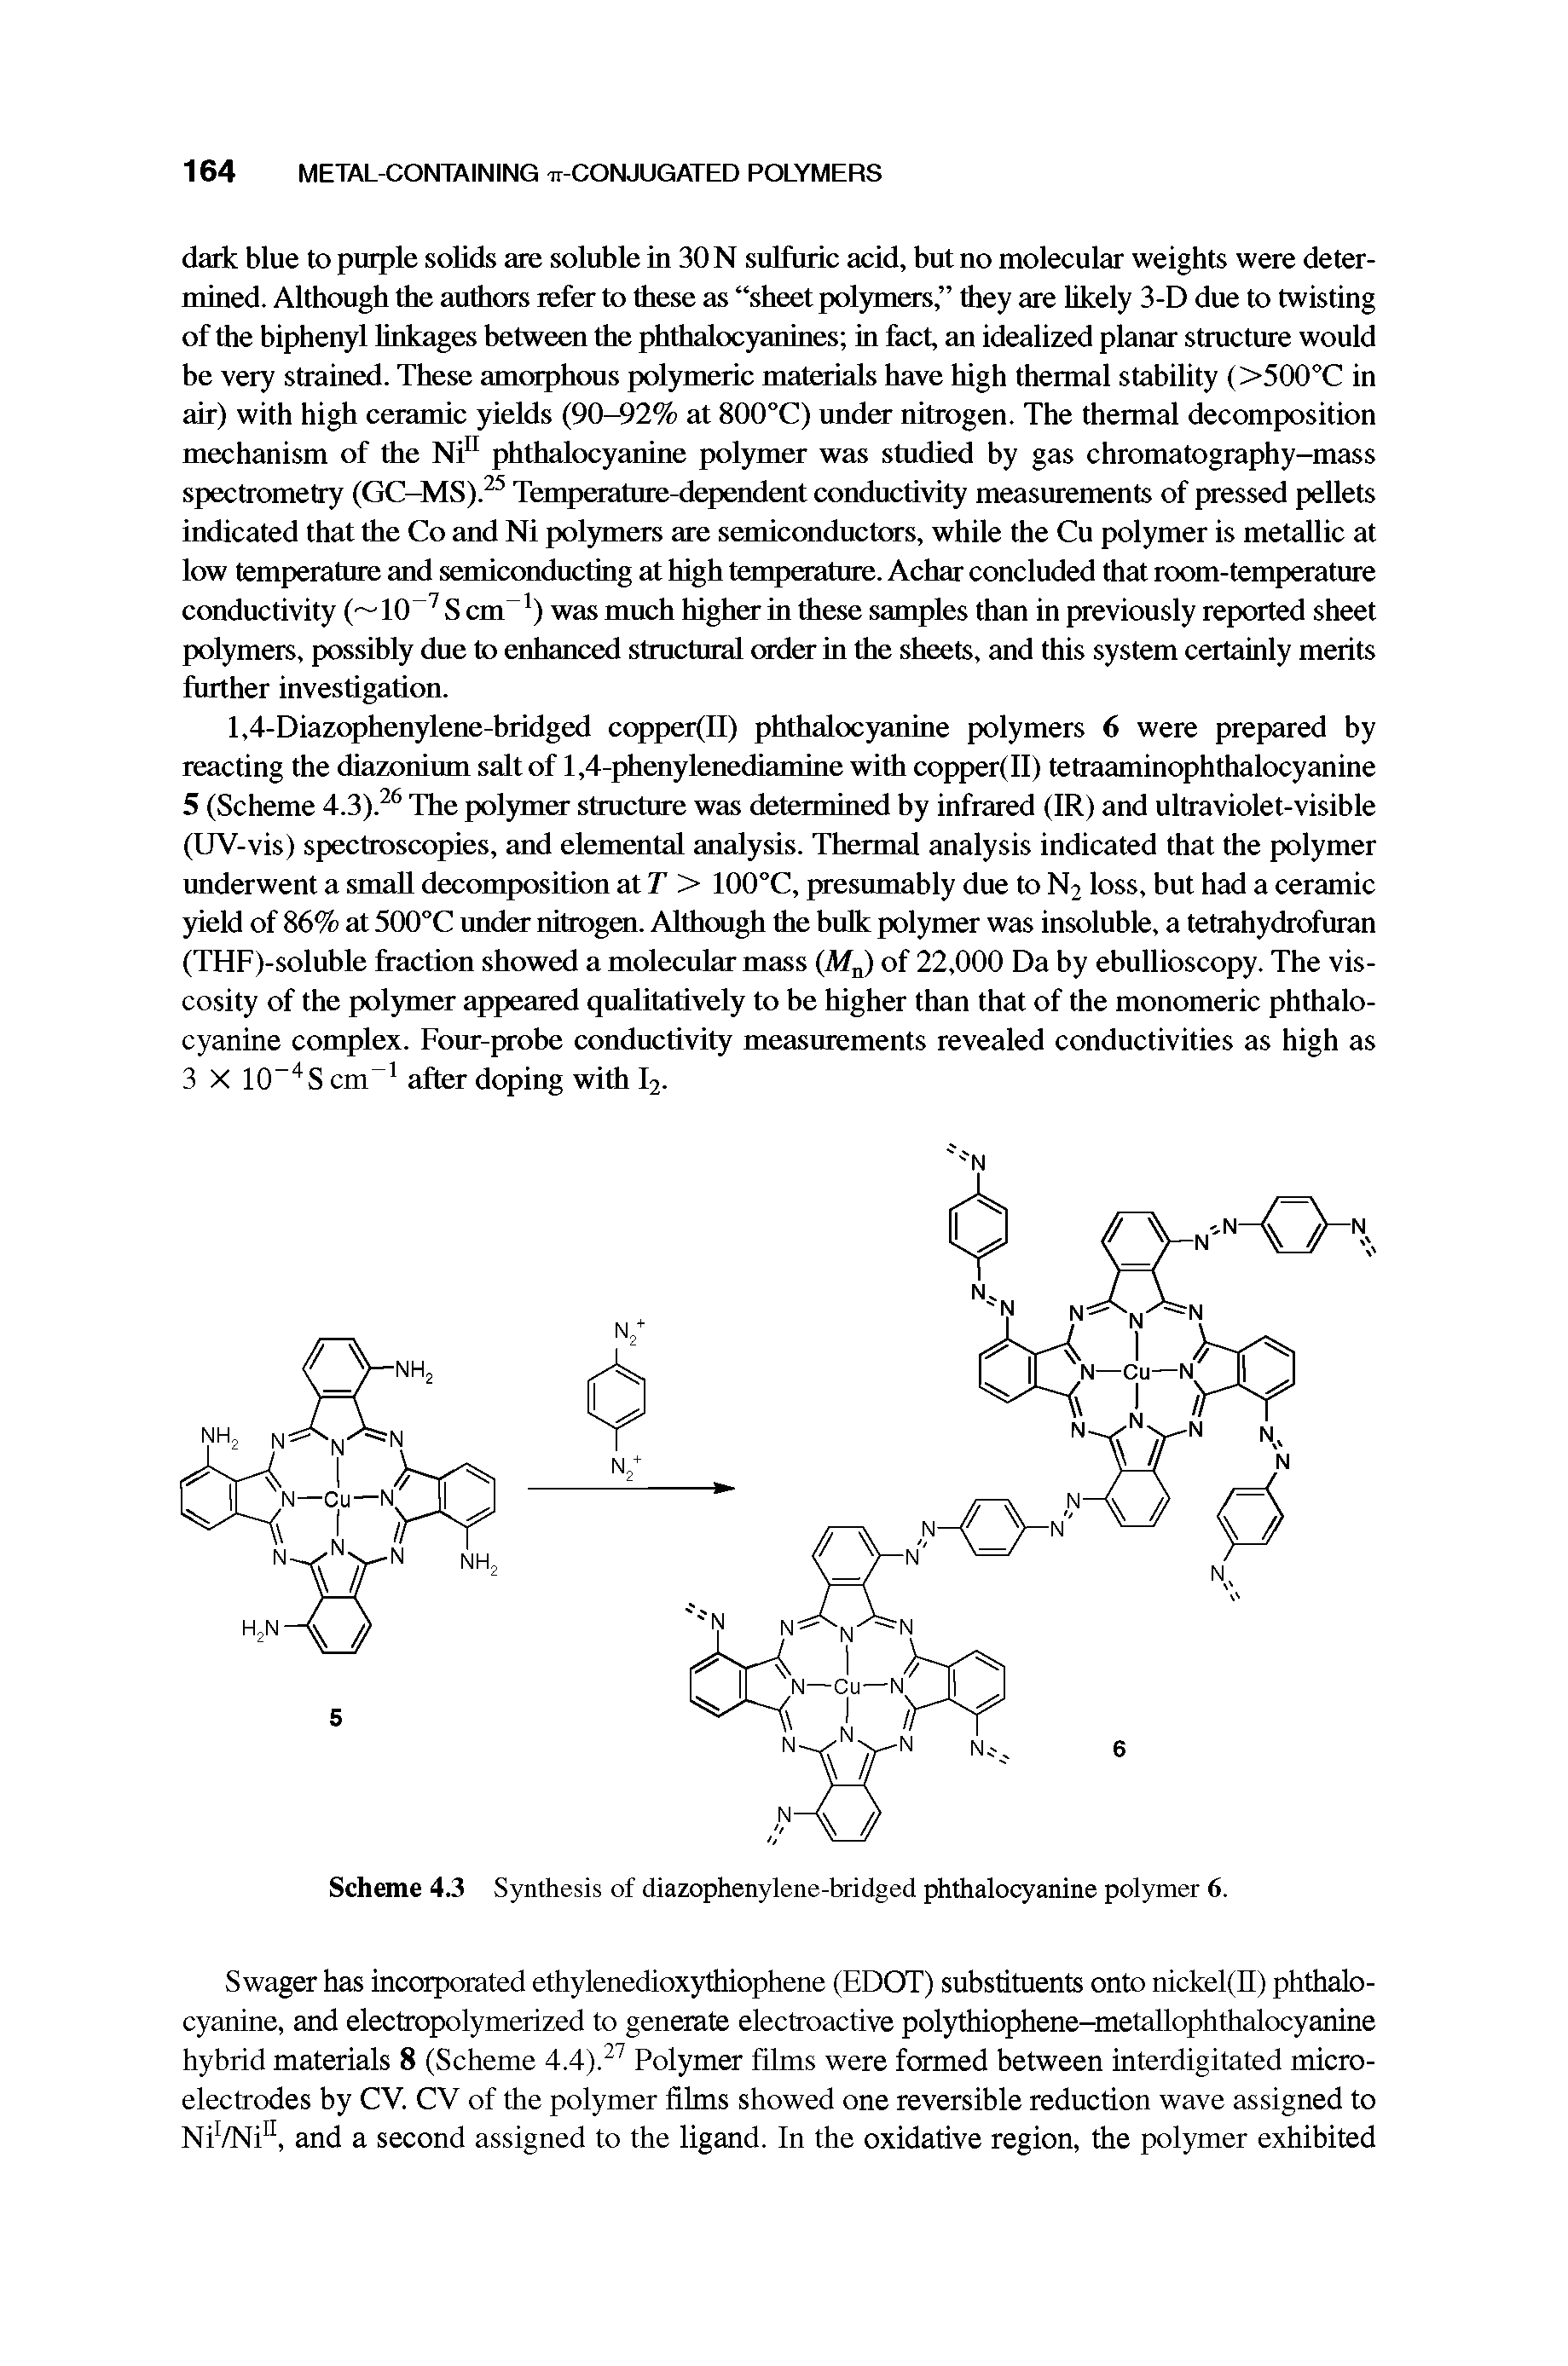 Scheme 4.3 Synthesis of diazophenylene-bridged phthalocyanine polymer 6.